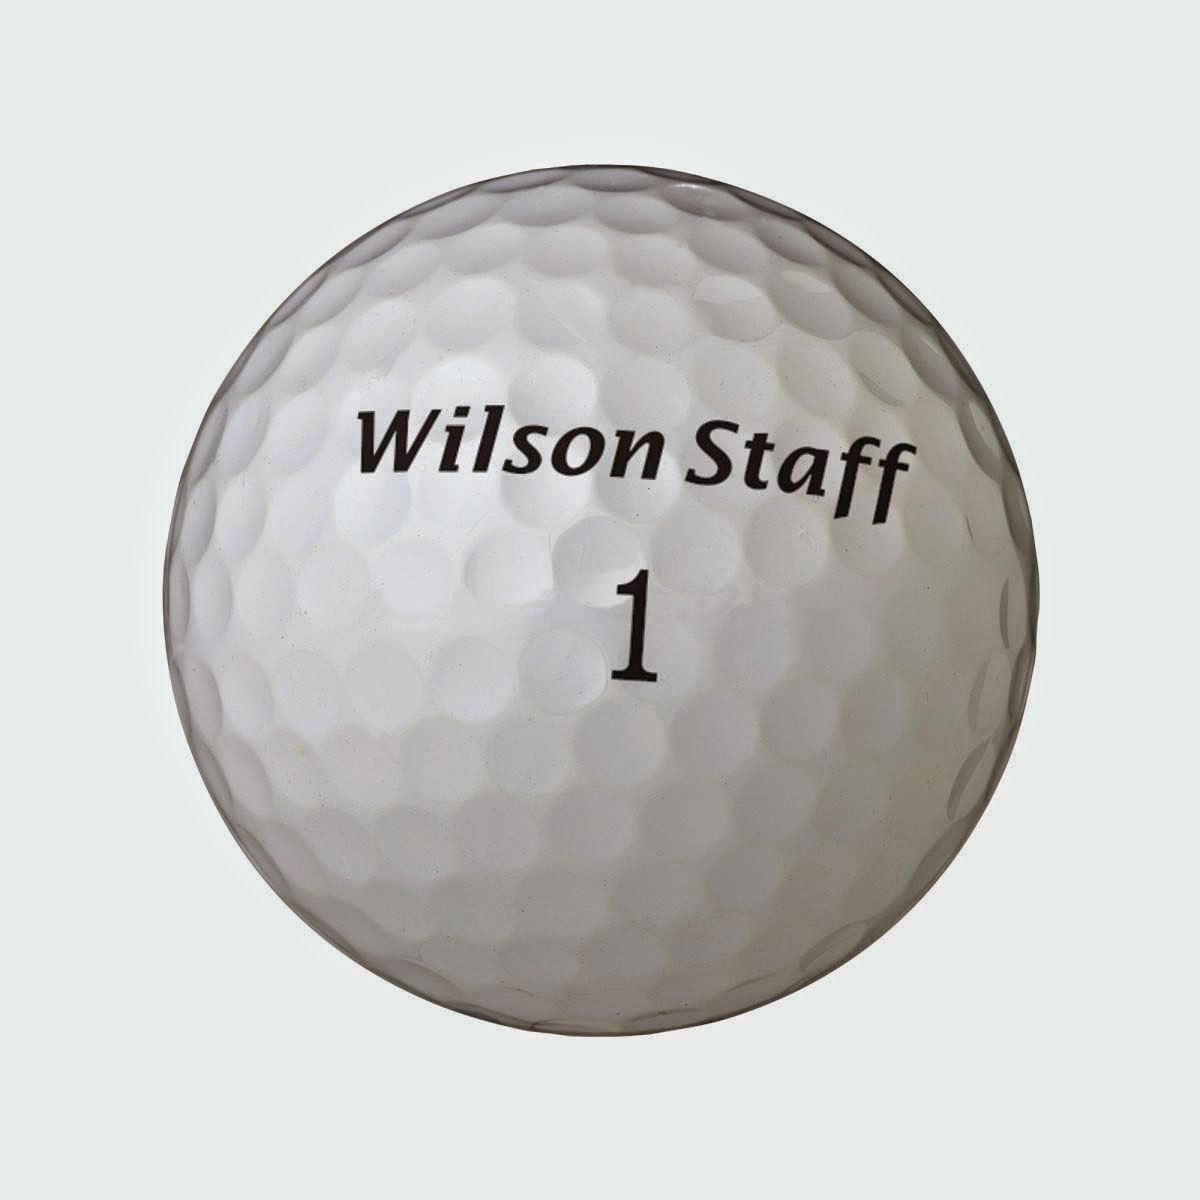 Spinning ball. Мяч для гольфа тайтлест. Мяч для гольфа в разрезе. Вилсон мяч прозрачный. Wilson Pro staff мяч гольфа.